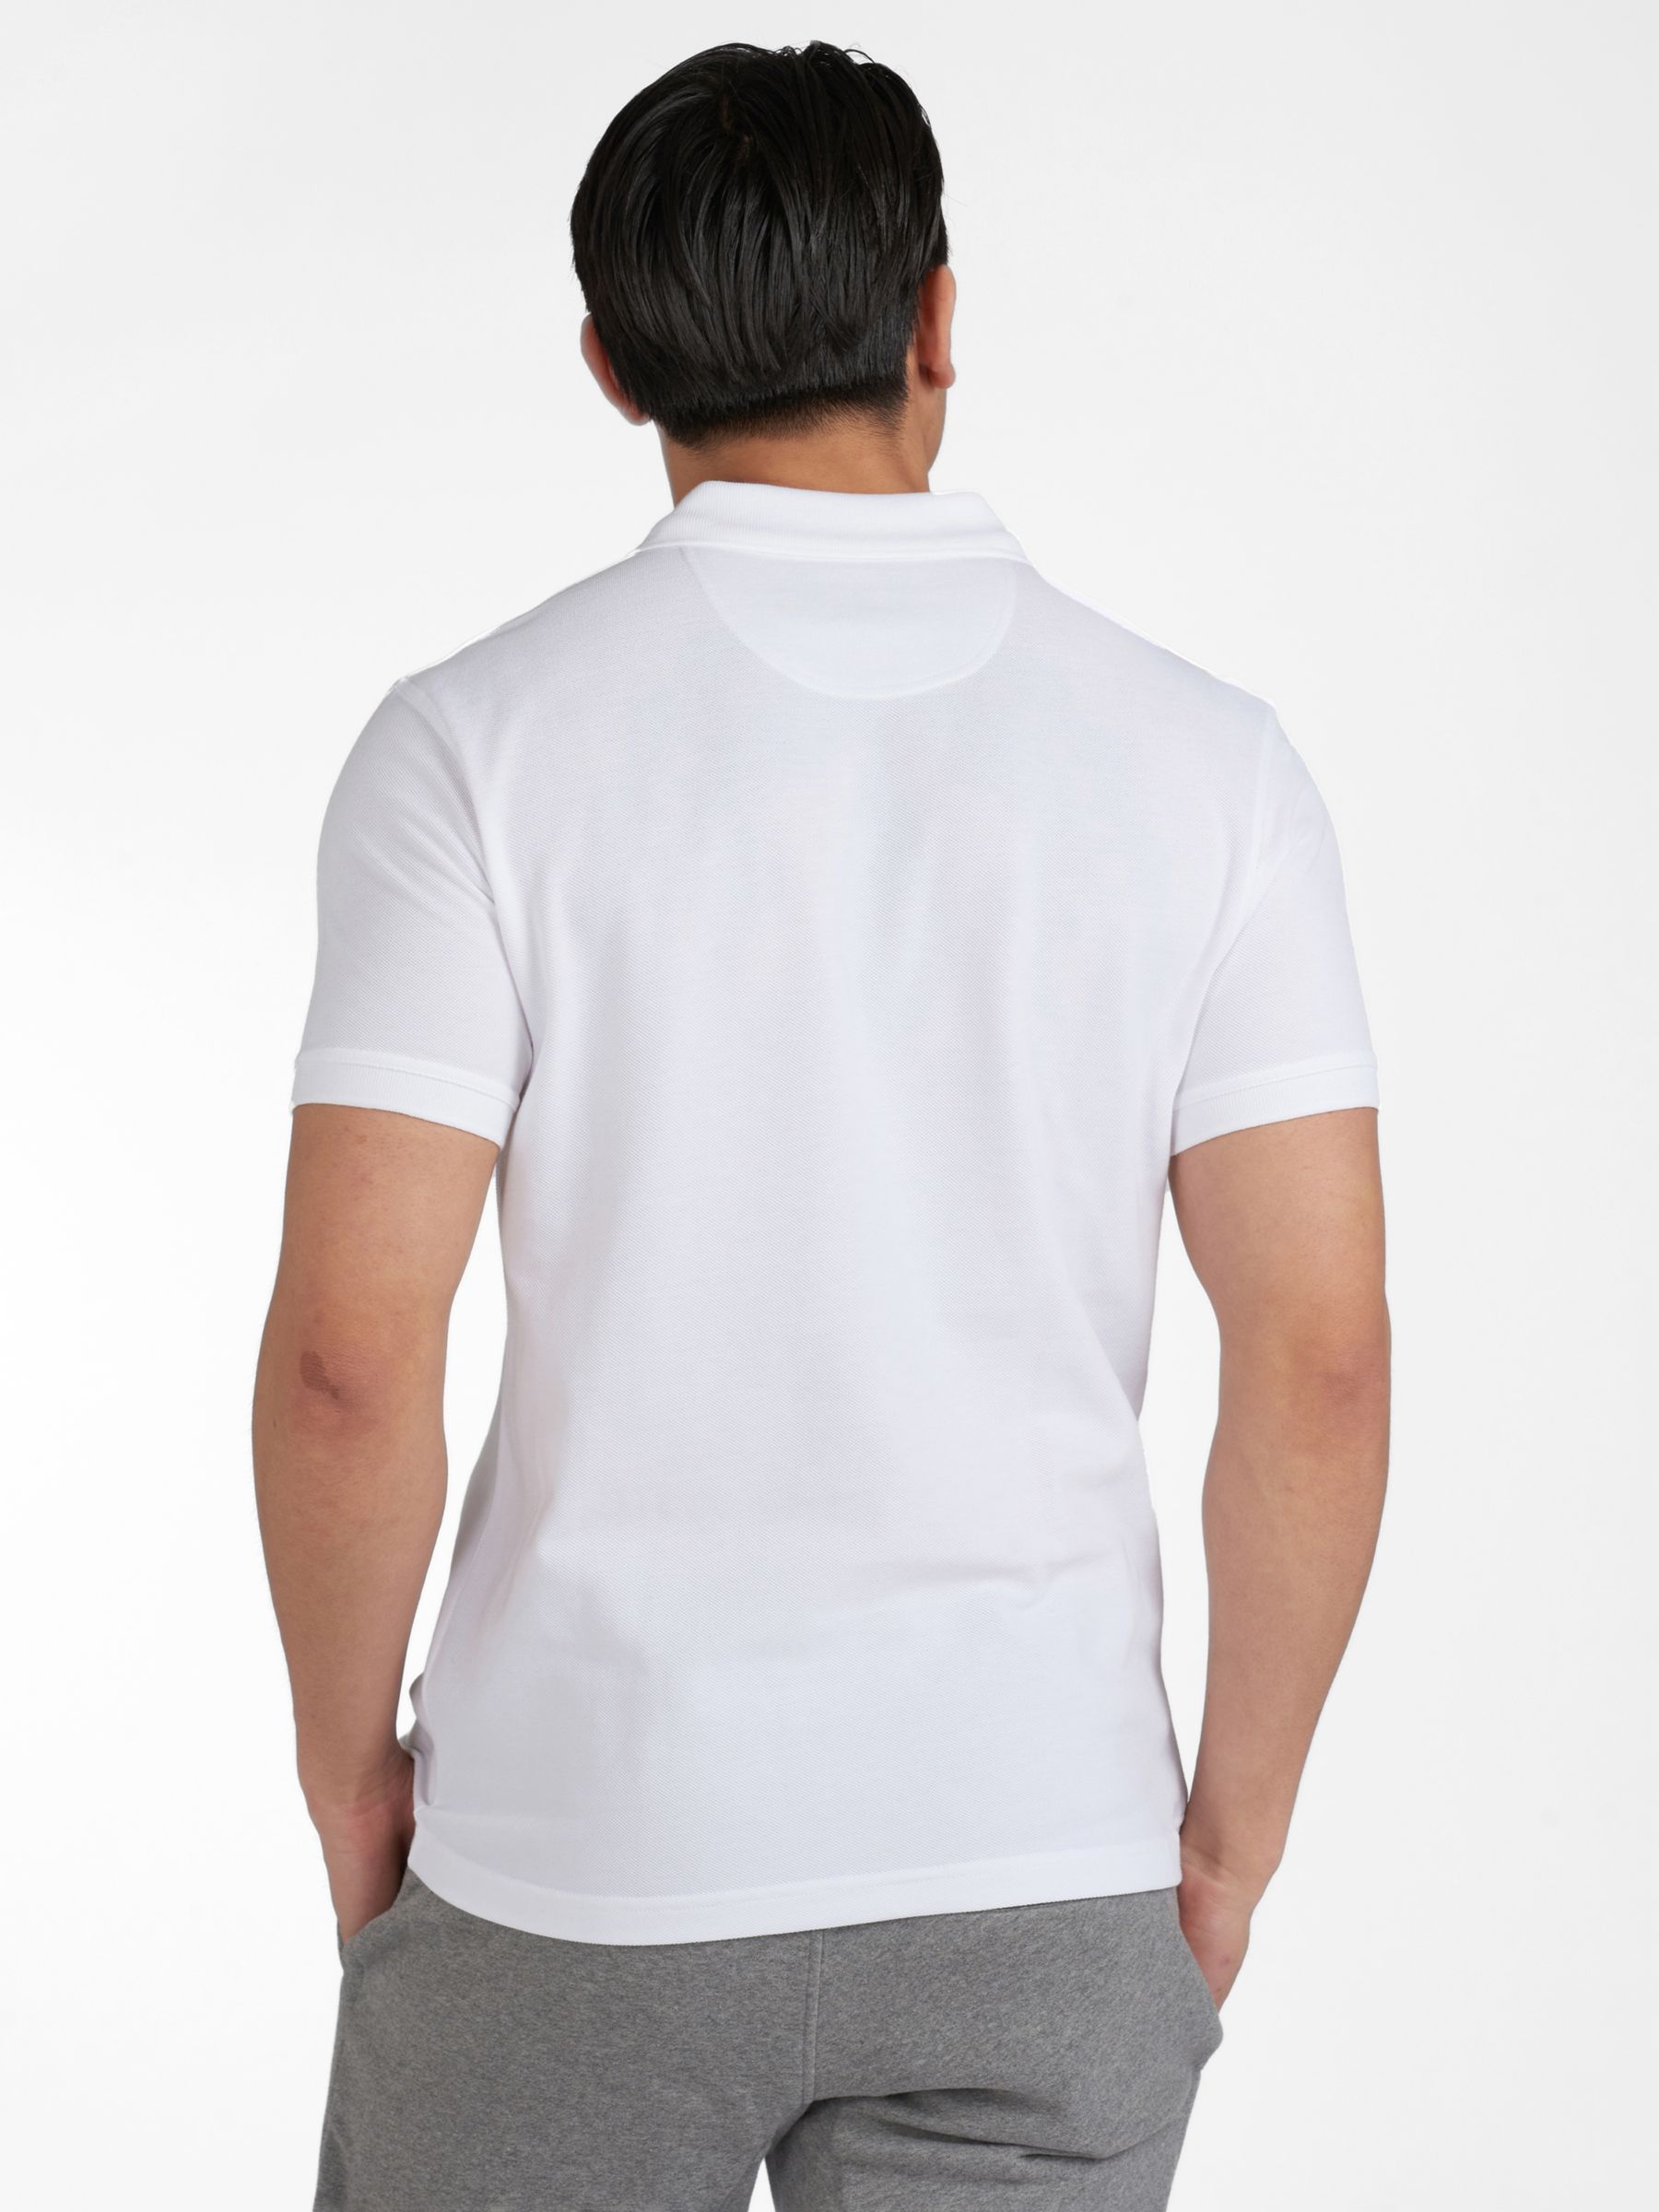 Barbour International Polo Shirt, White at John Lewis & Partners